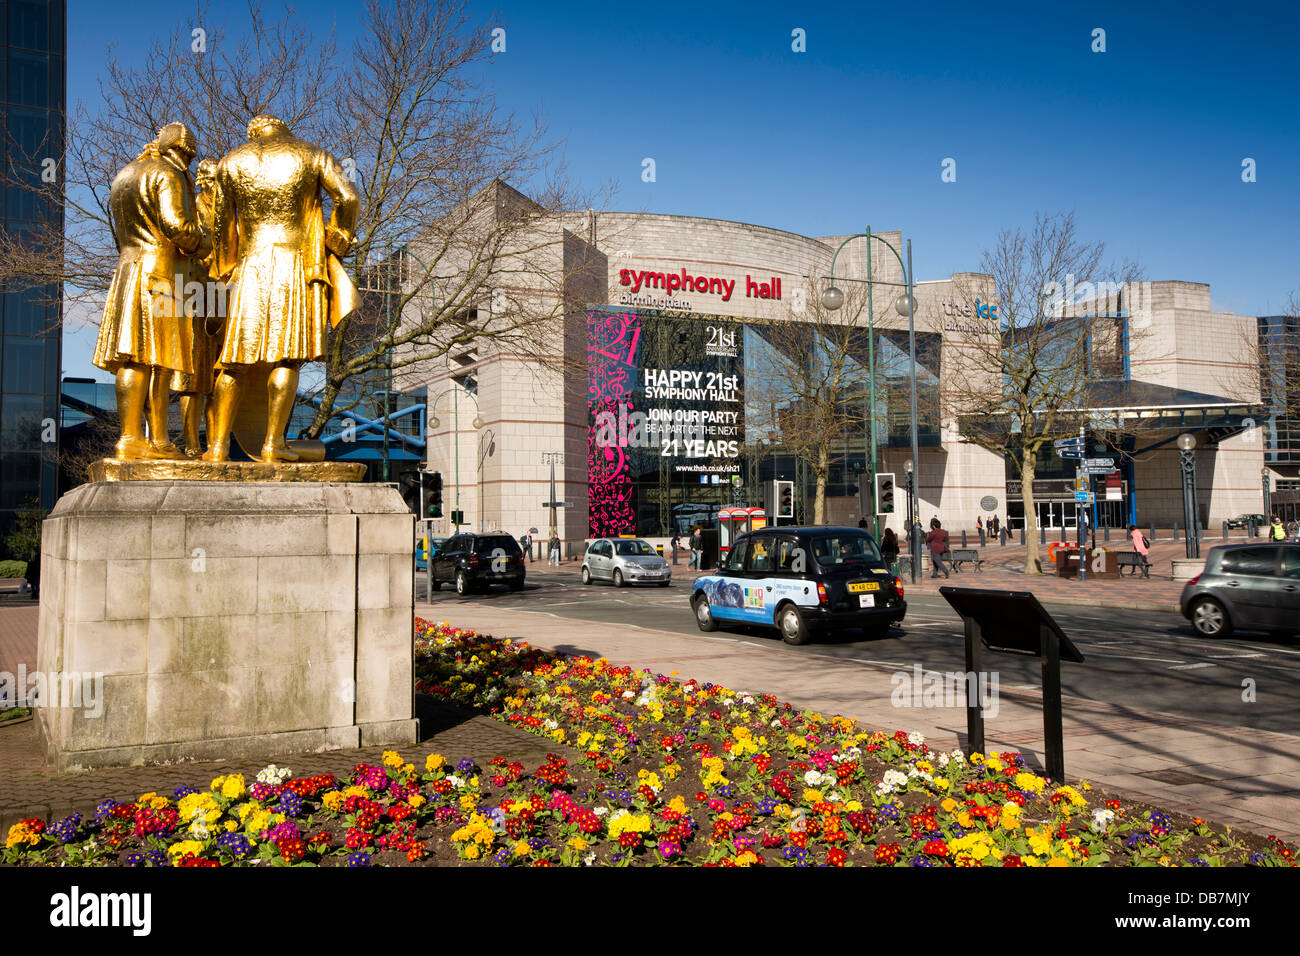 UK, England, Birmingham, Broad Street, the Three Golden Boys Statue of Boulton, Watt and Murdoch opposite Symphony Hall Stock Photo